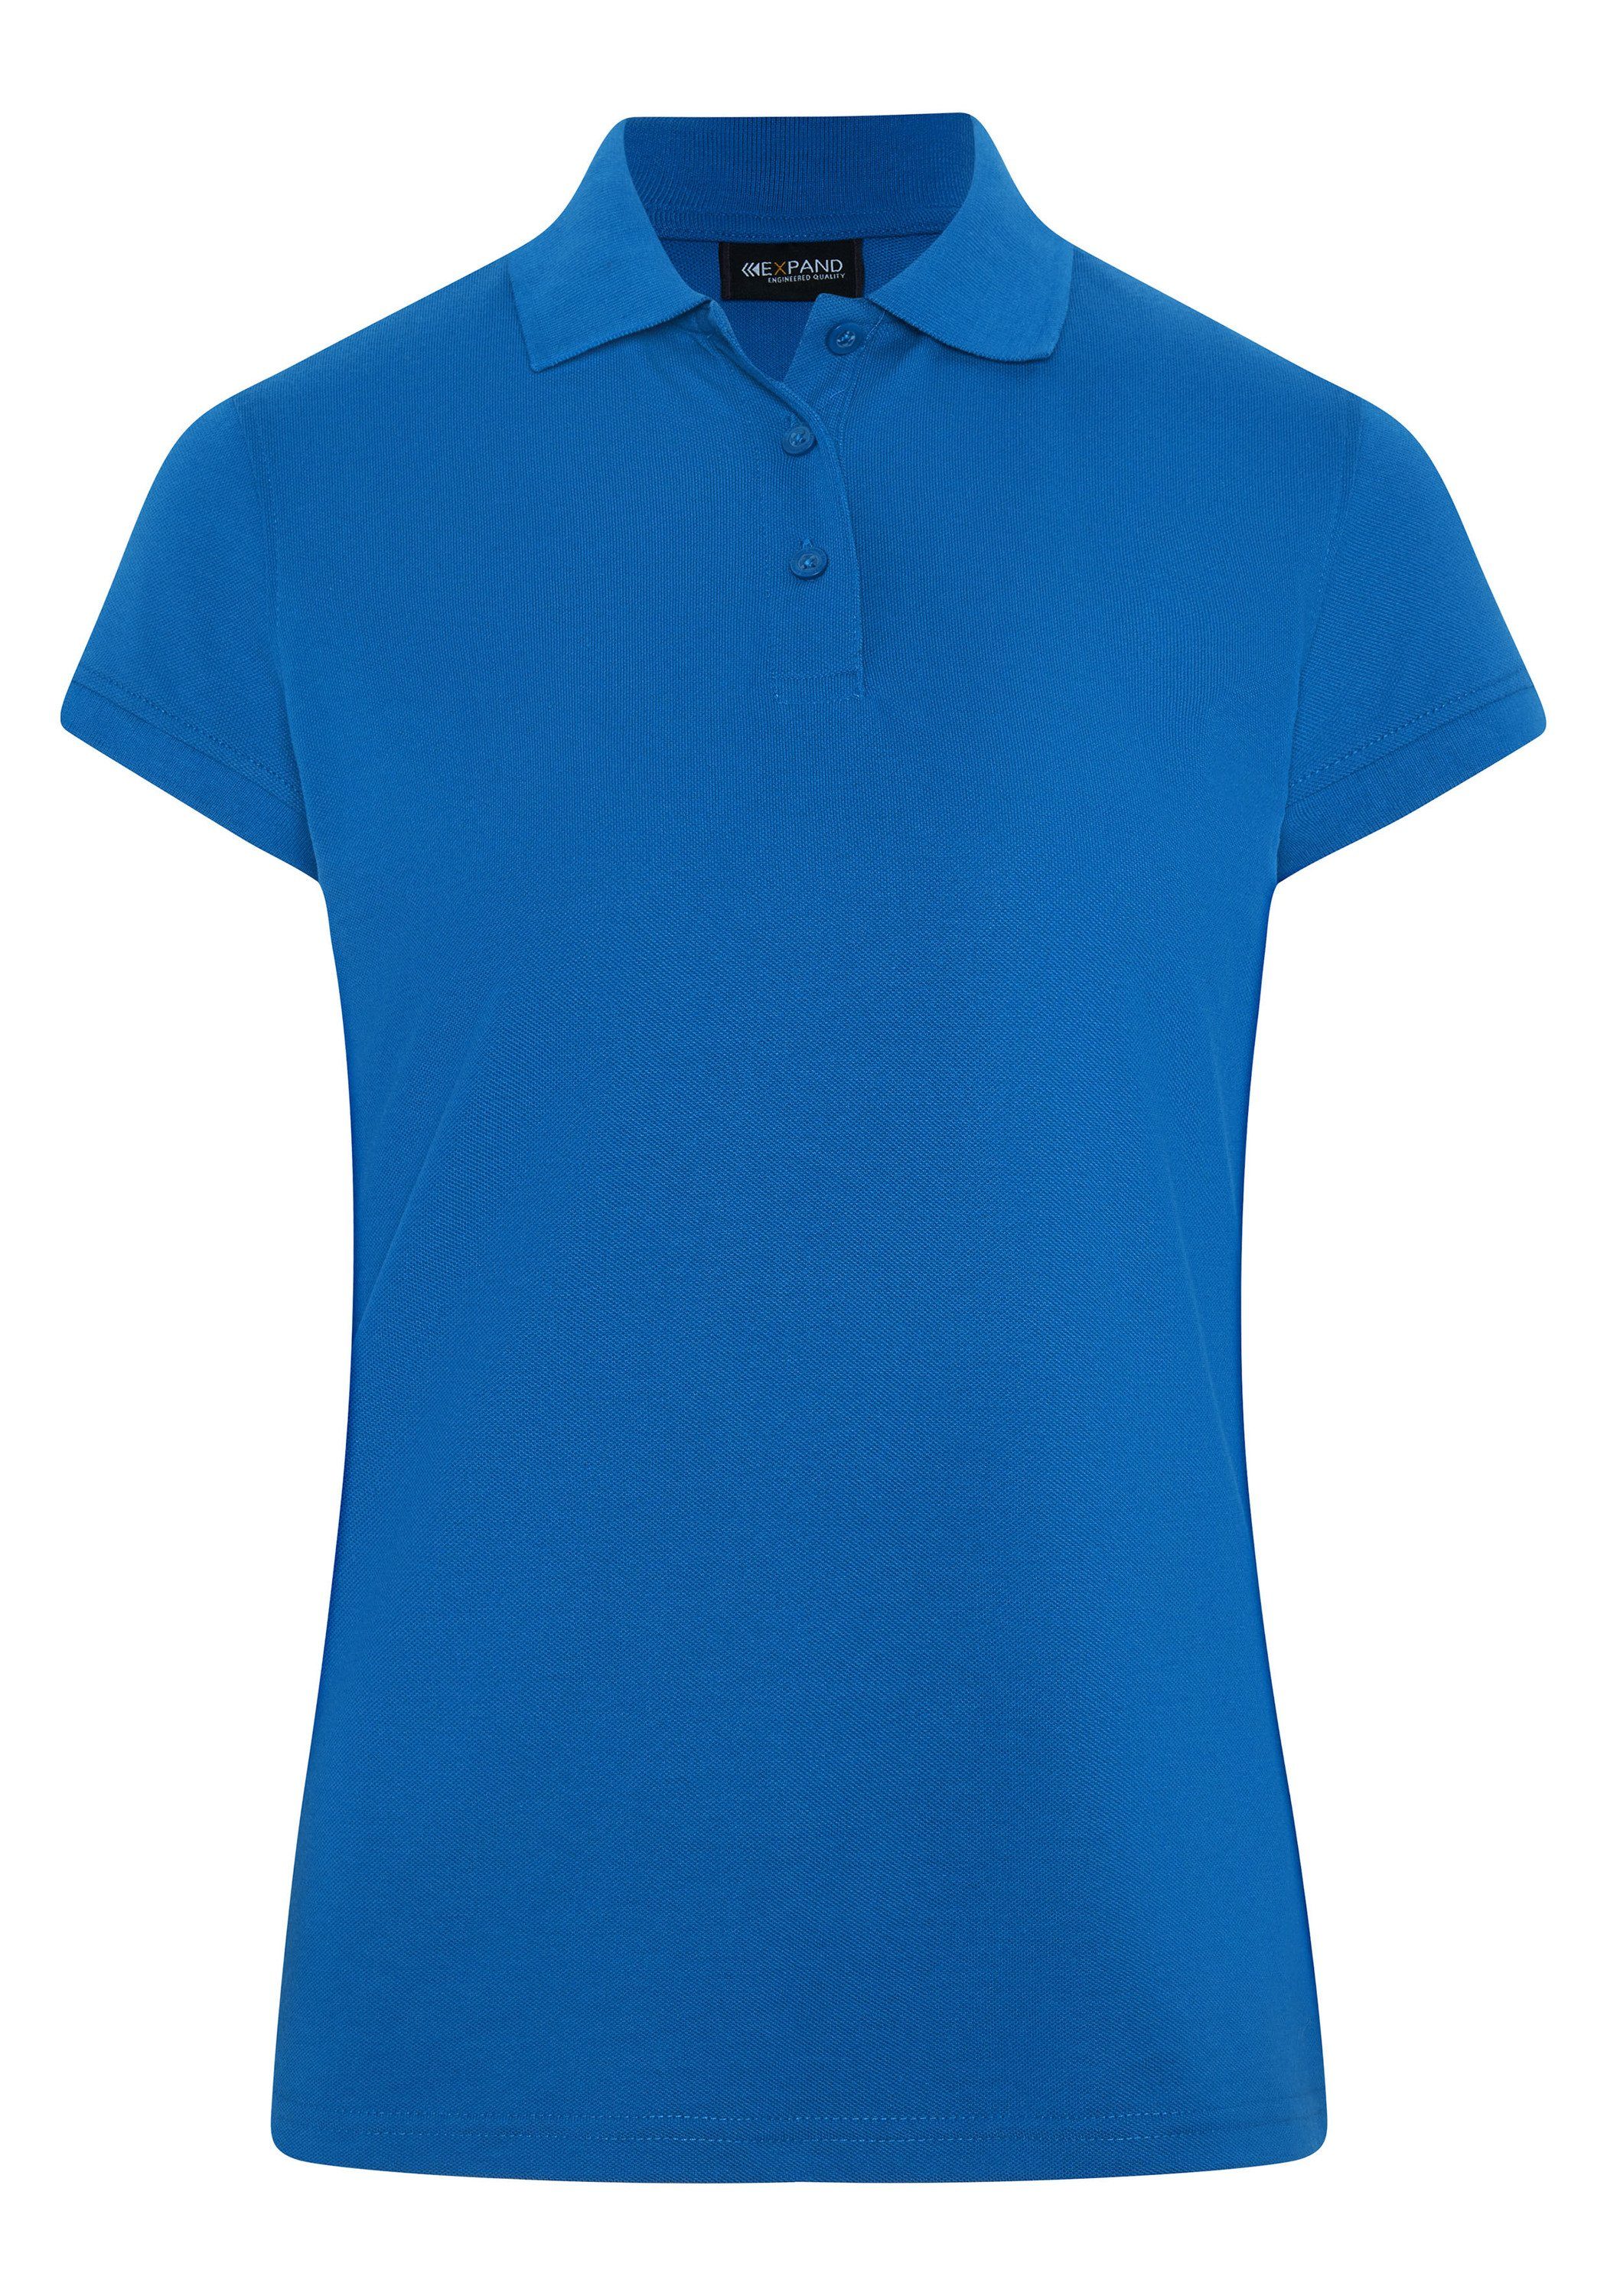 Expand Poloshirt aus strapazierfähigem Material royal blau